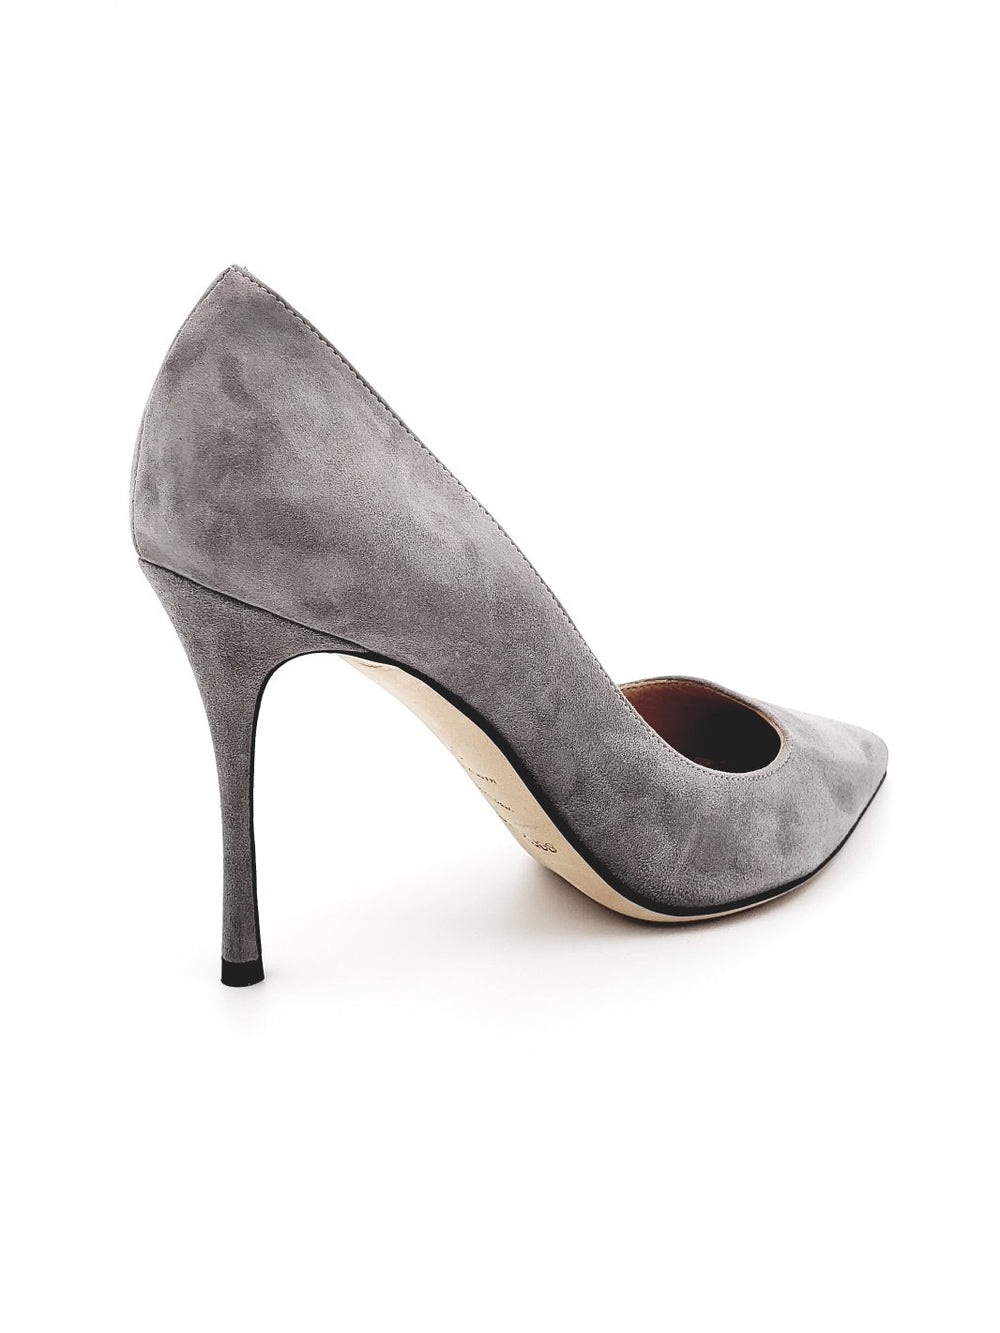 Godiva Grey Suede Pump - SERGIO ROSSI - Liberty Shoes Australia